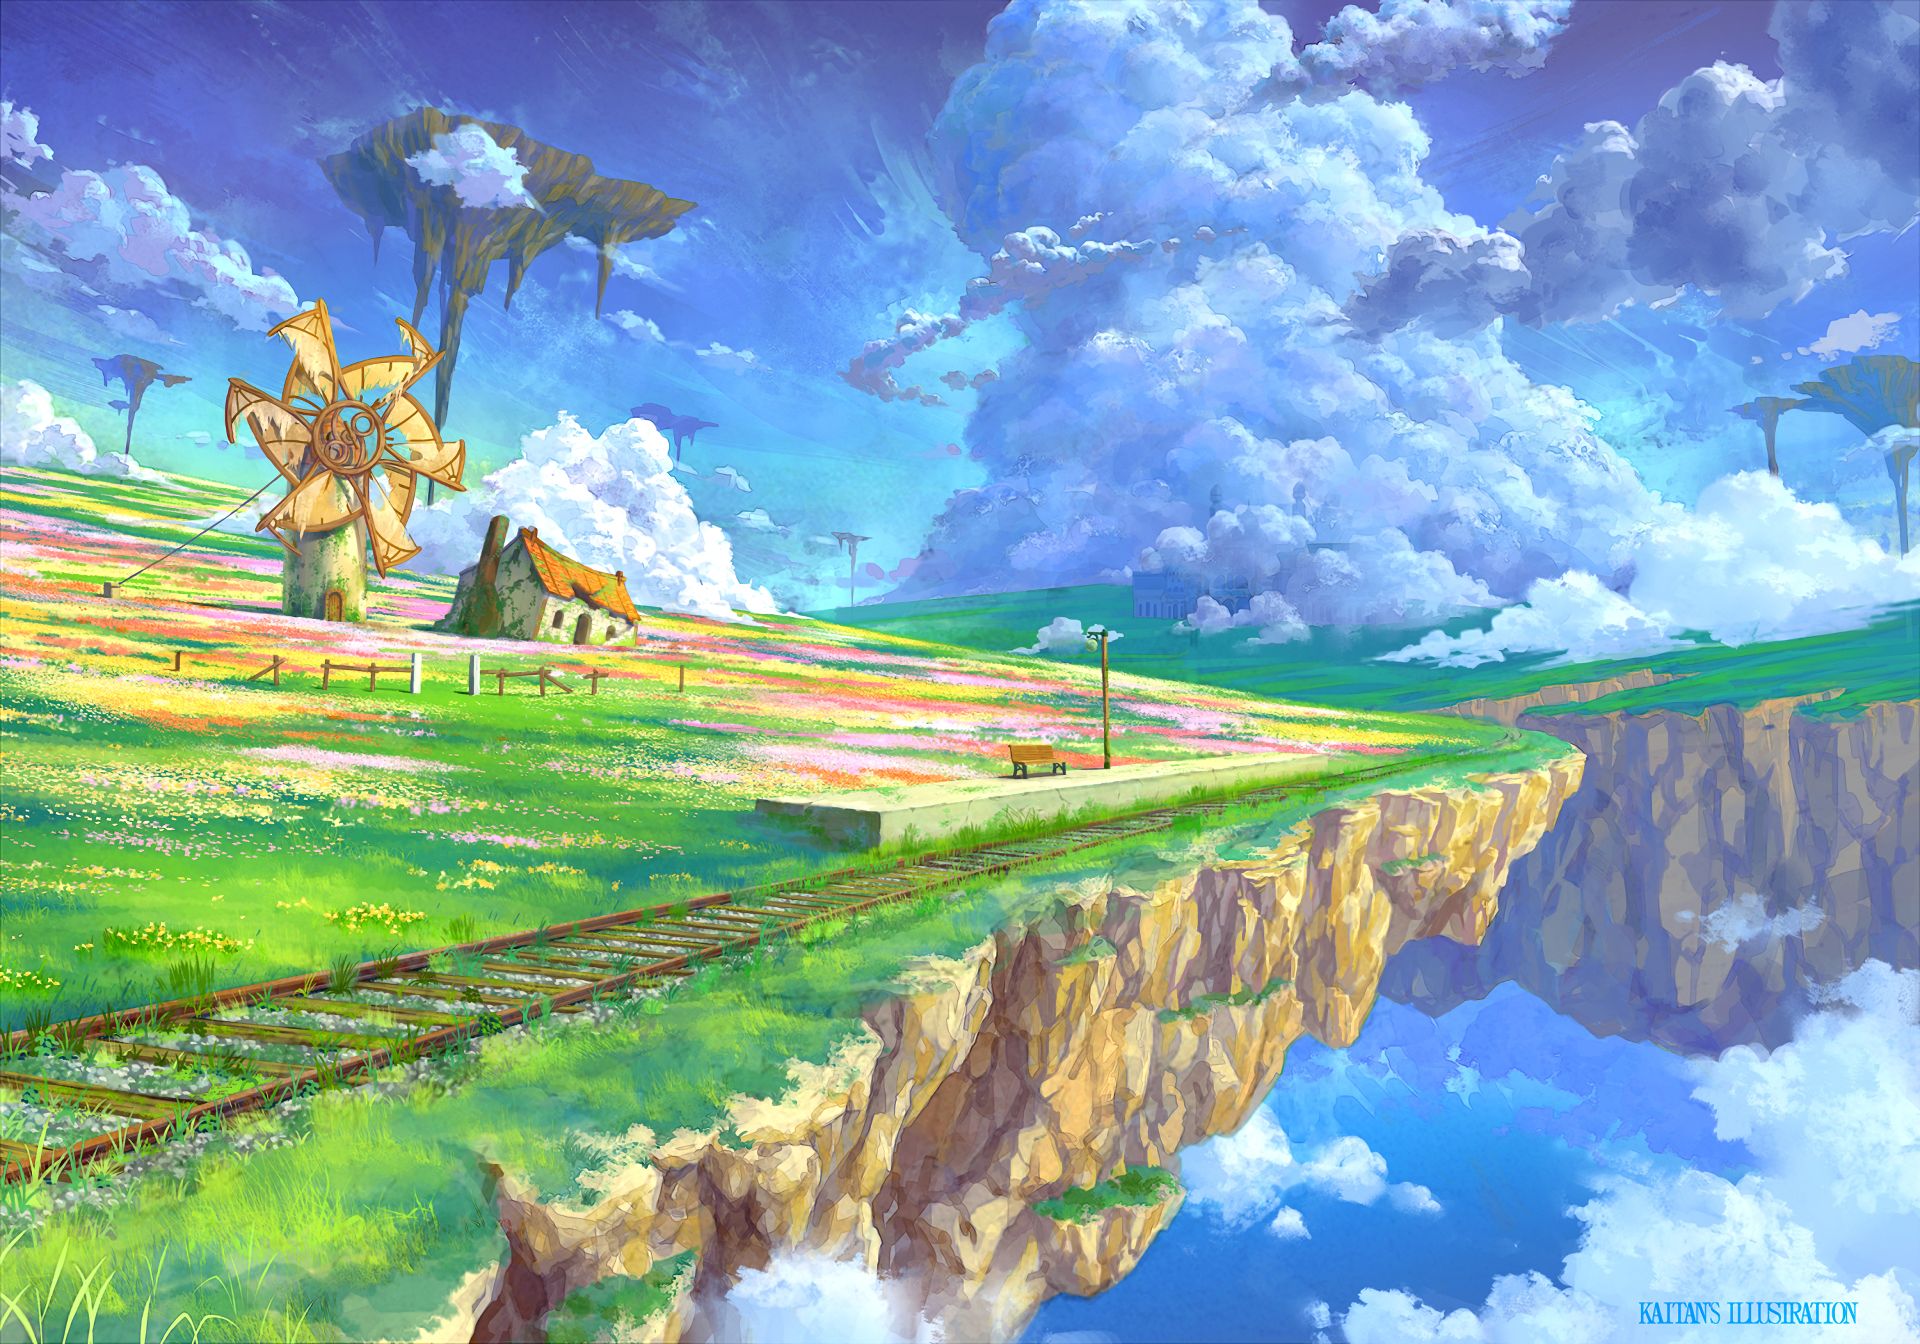 floating island, nature, windmill, sky, anime, original, cloud, flower, landscape, scenic, train station